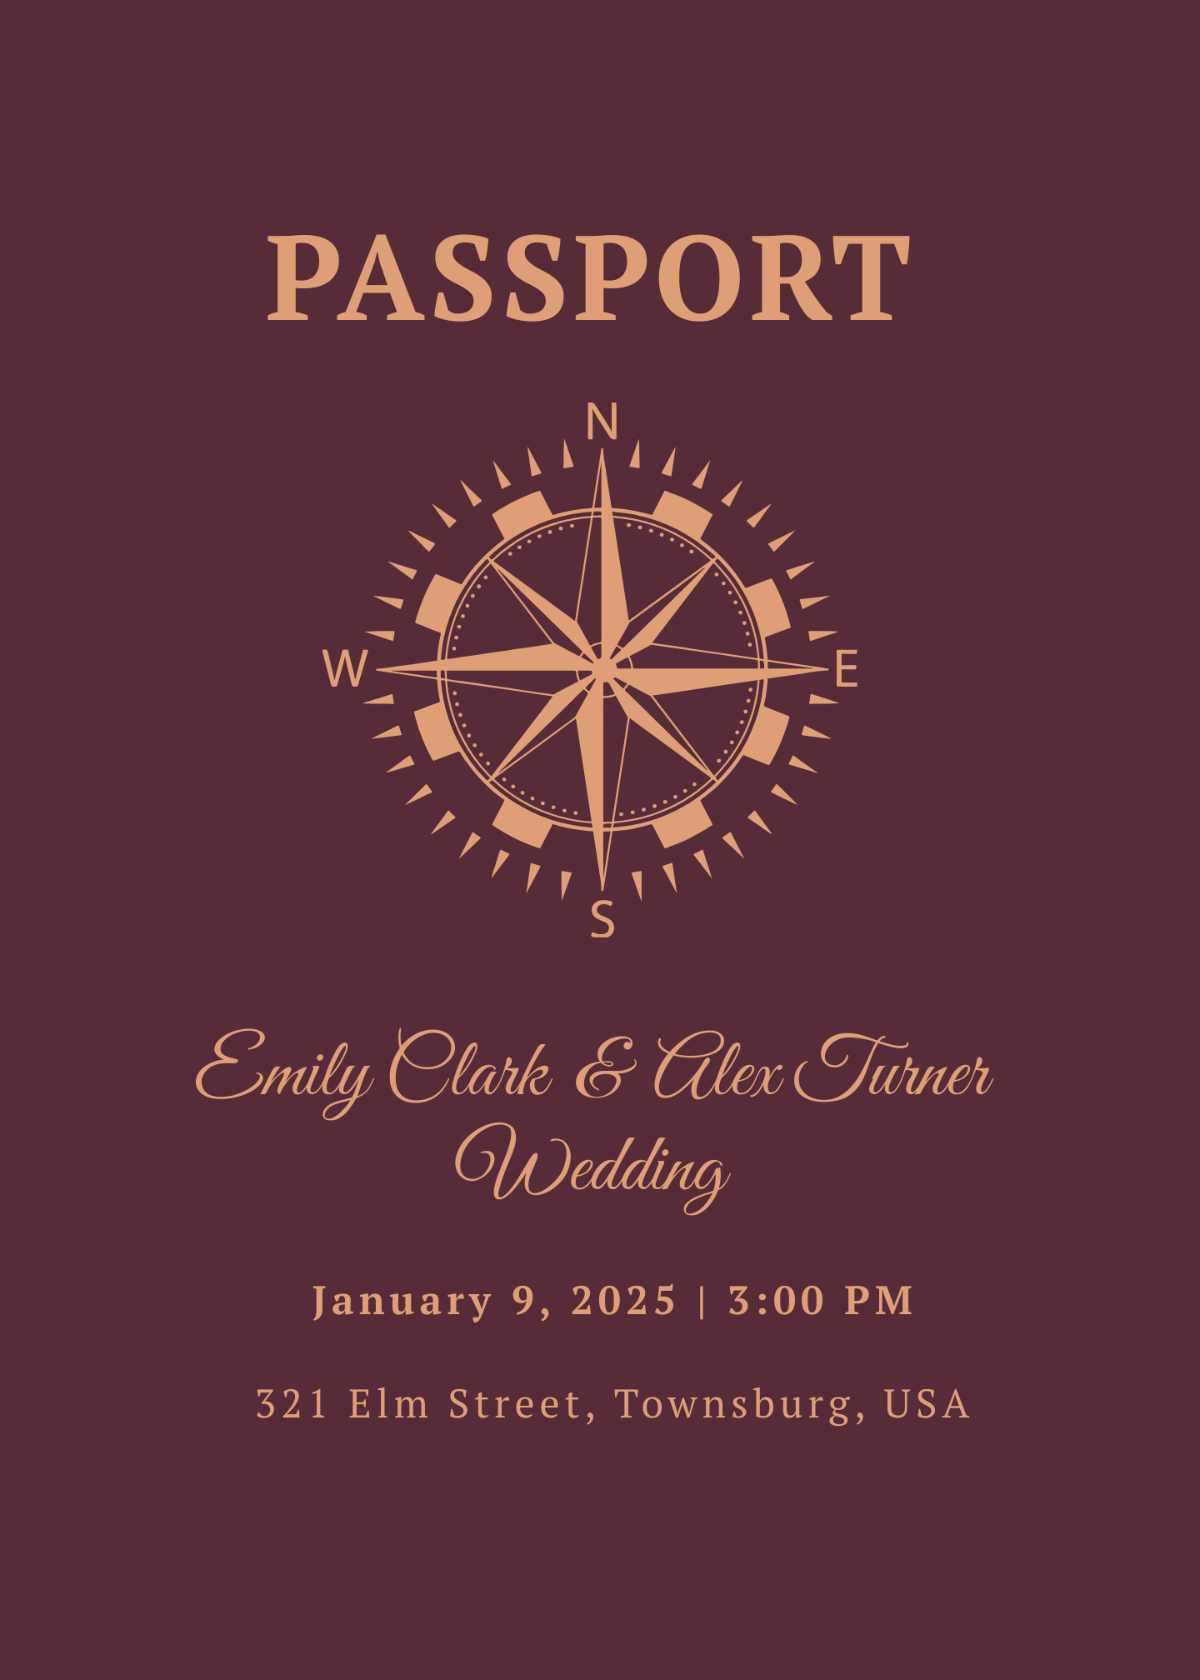 Vintage Passport Wedding Invitation